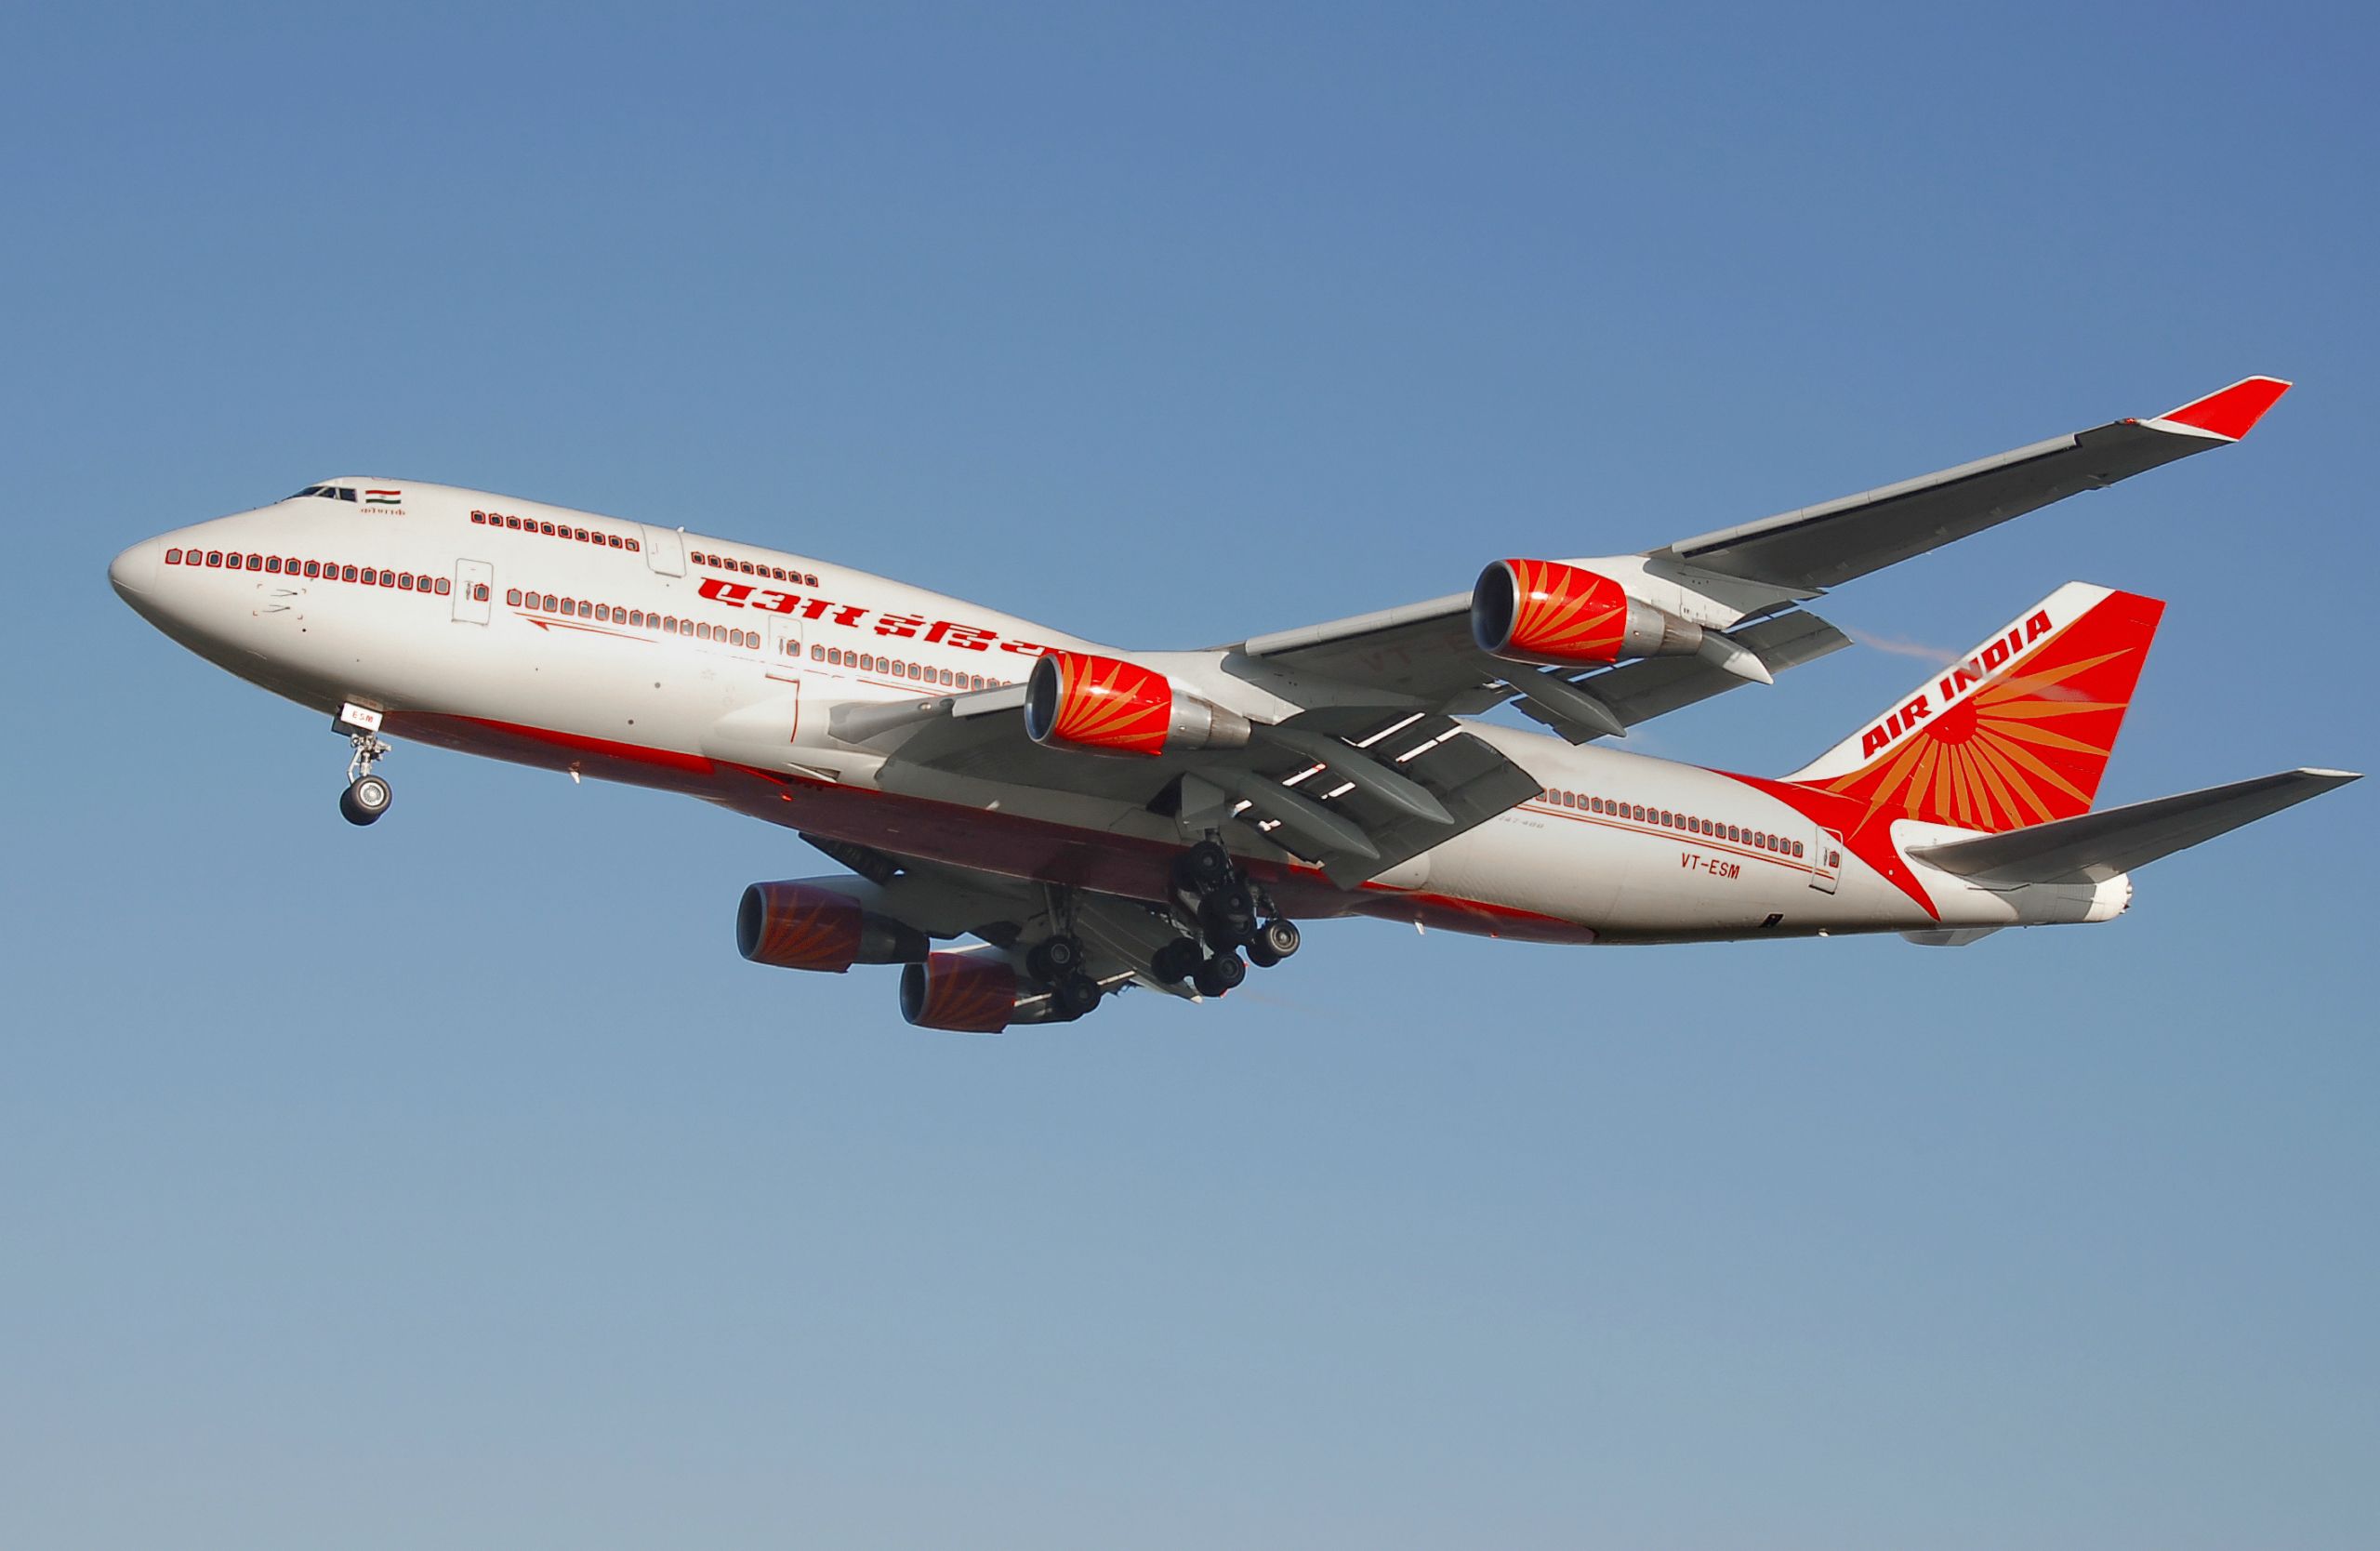 Air India B747-400